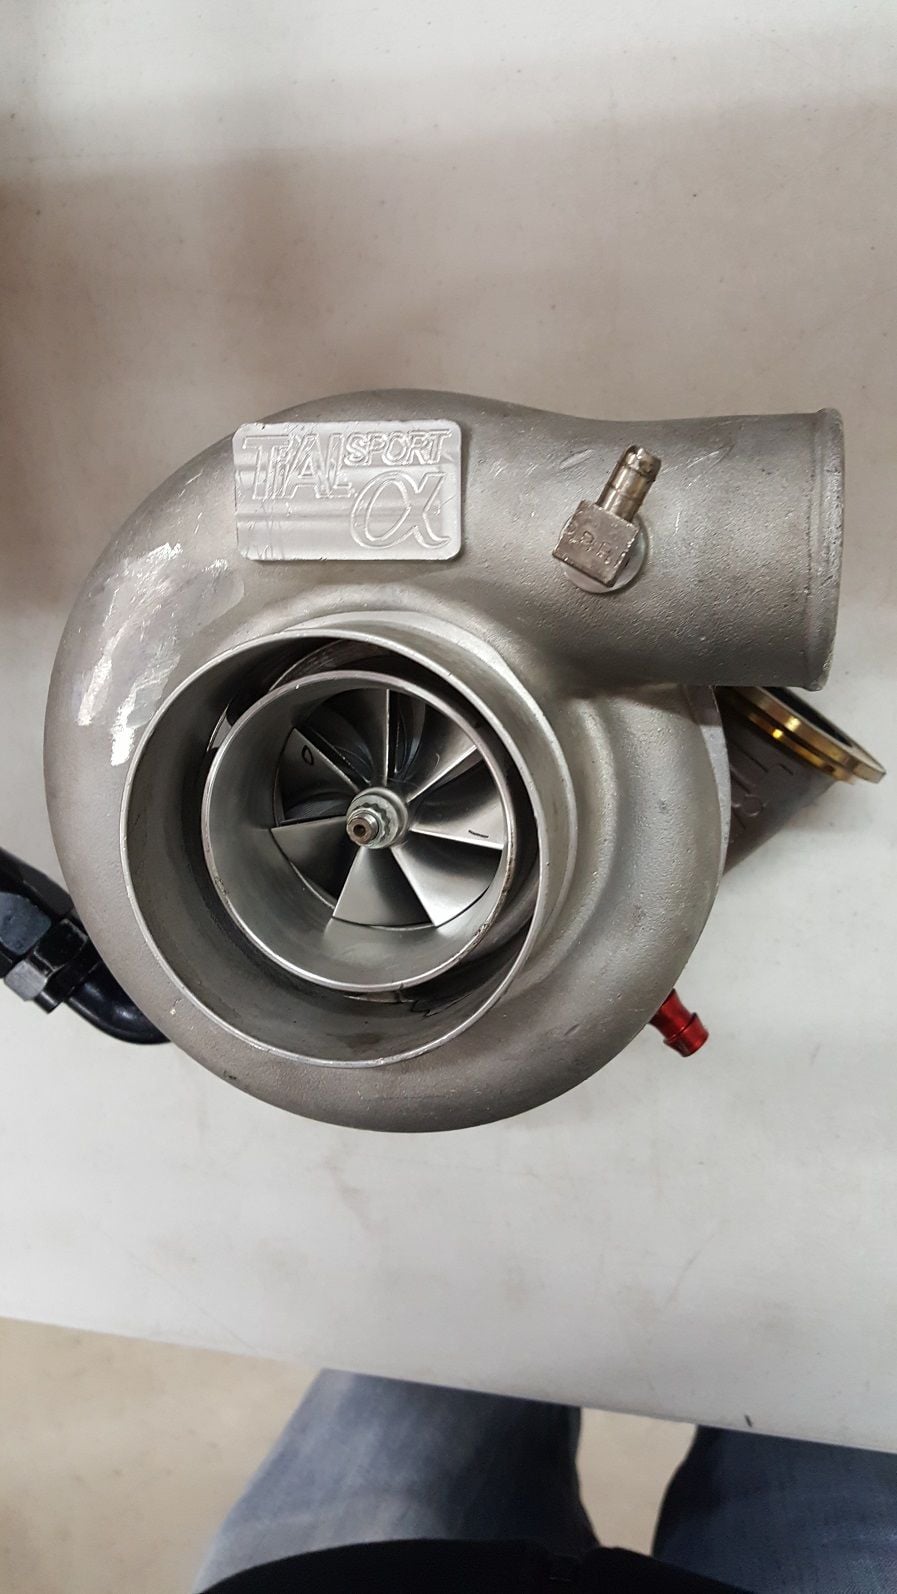 Engine - Power Adders - Evo X GTX3076 turbo, Sheerer Exhaust manifold, AGP intercooler, intake - Used - 2008 to 2015 Mitsubishi Lancer Evolution - North Ridgeville, OH 44039, United States